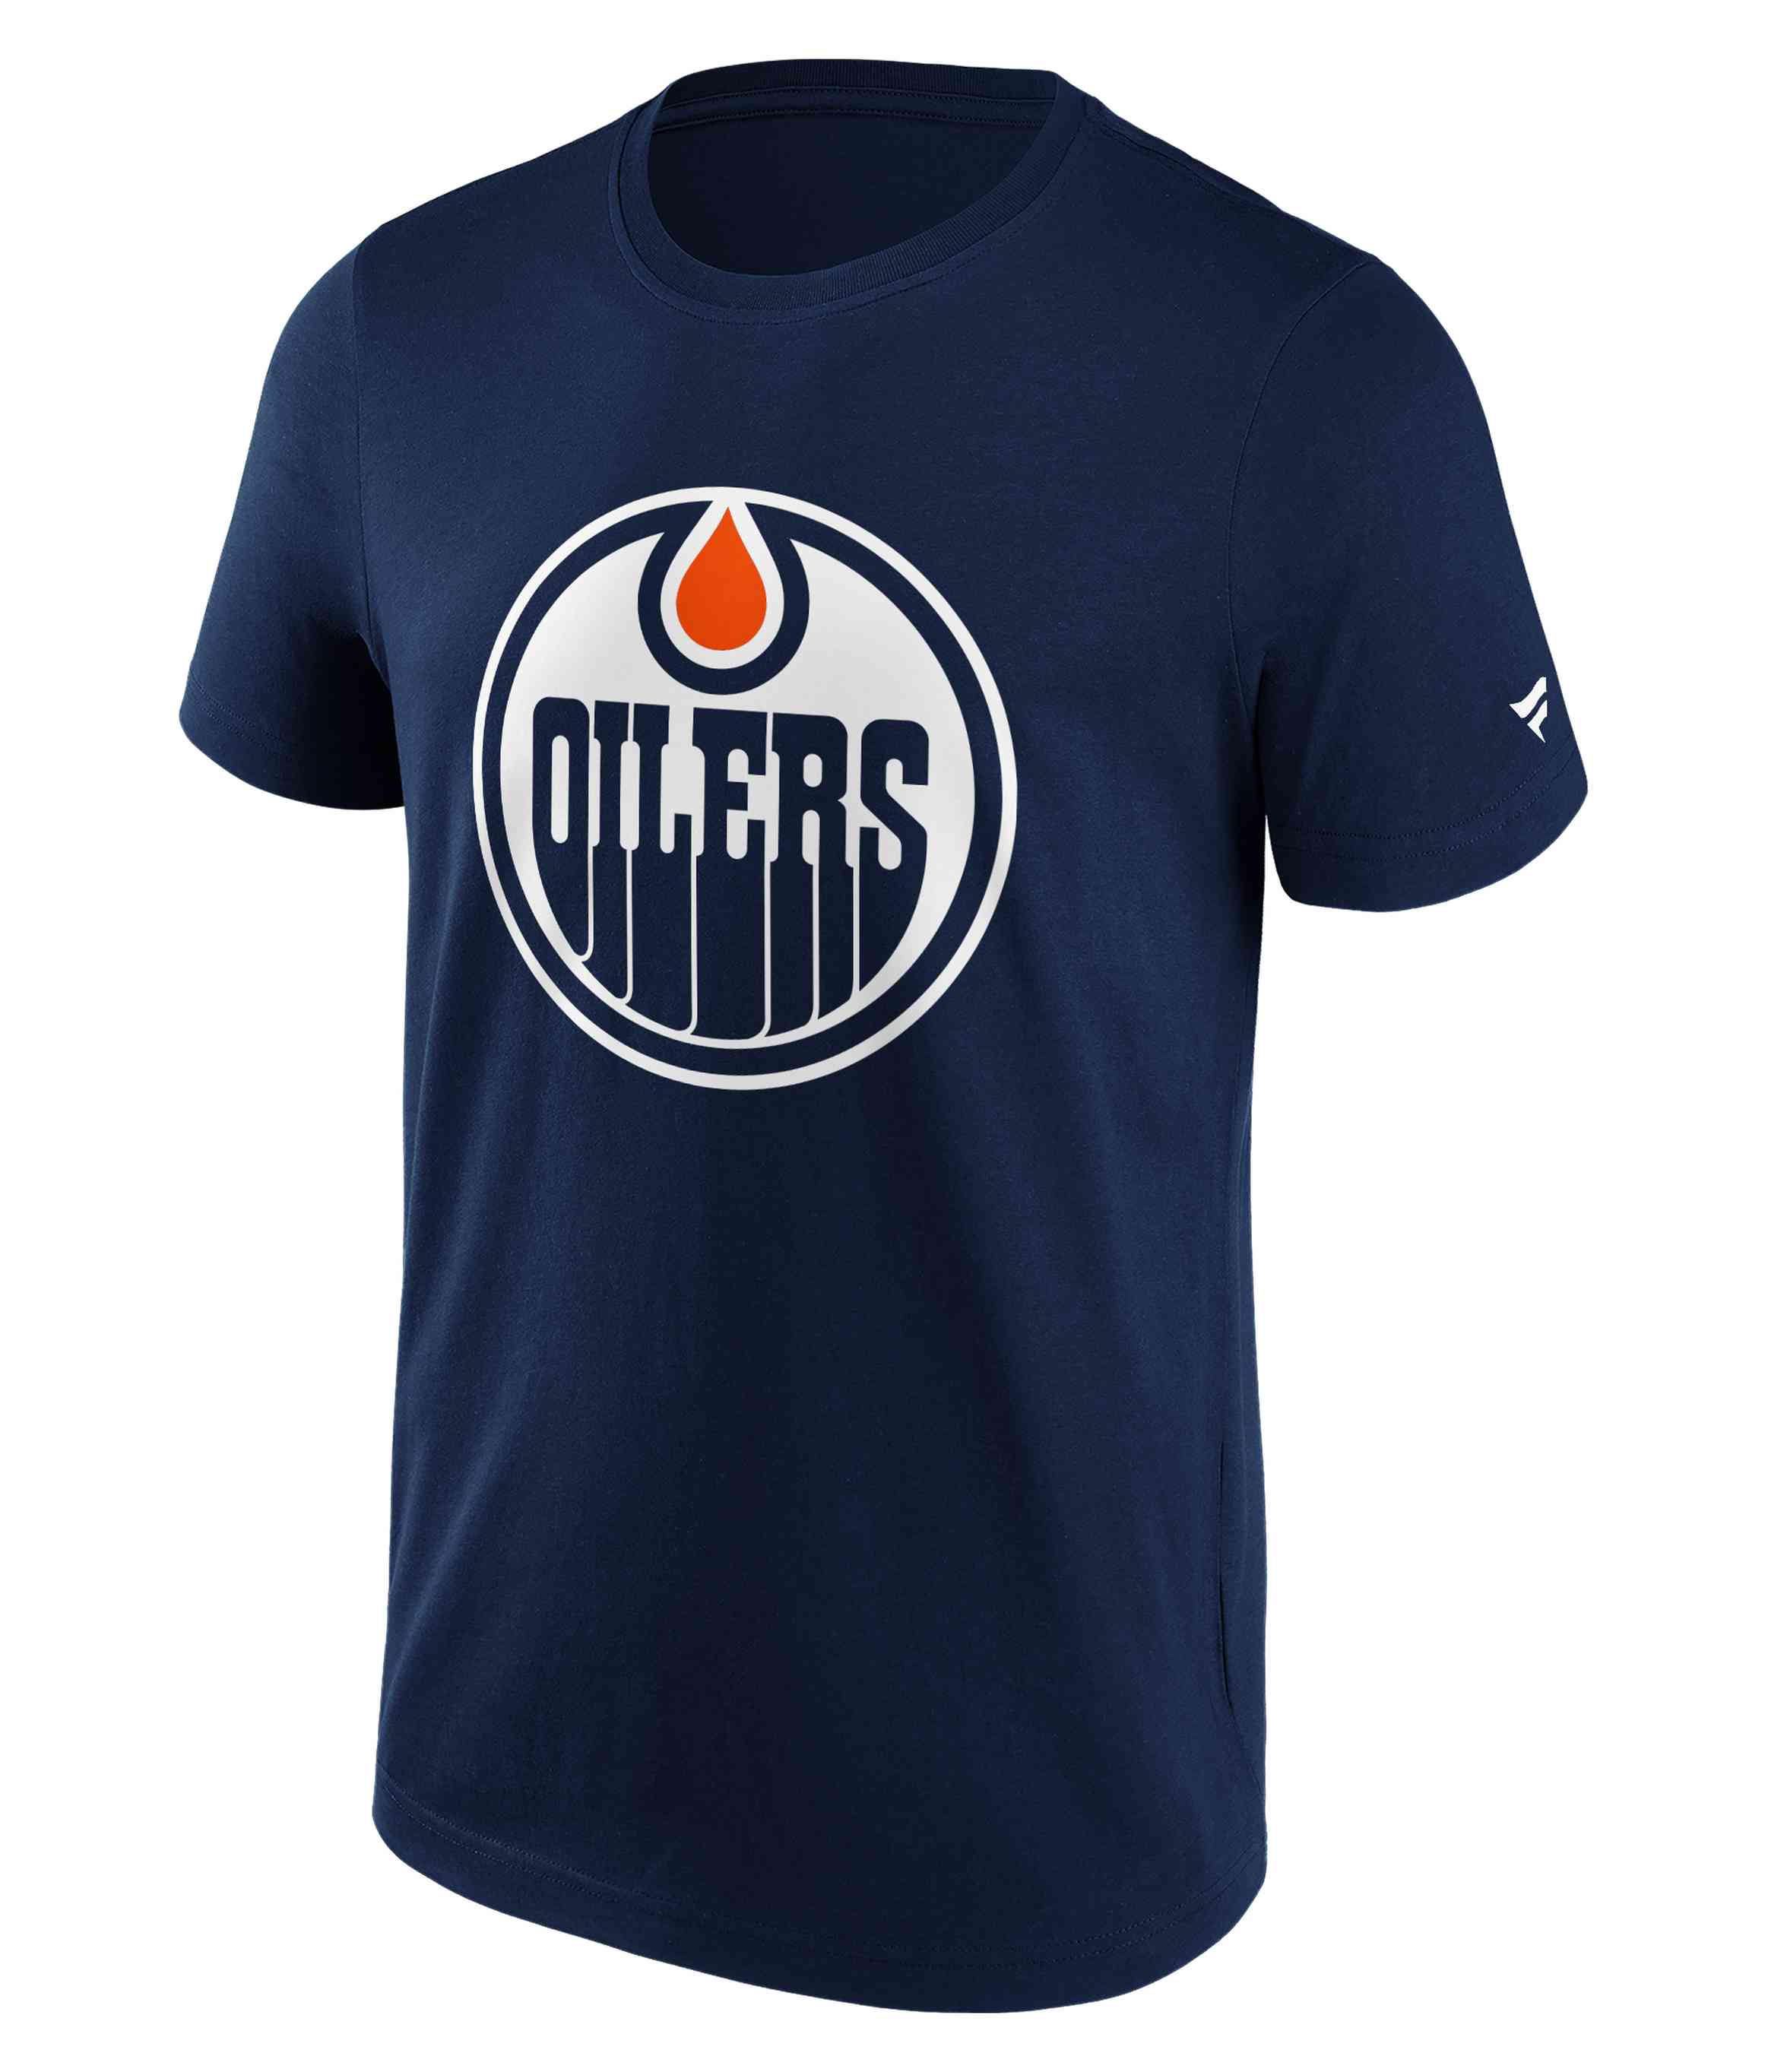 Fanatics - NHL Edmonton Oilers Primary Logo Graphic T-Shirt